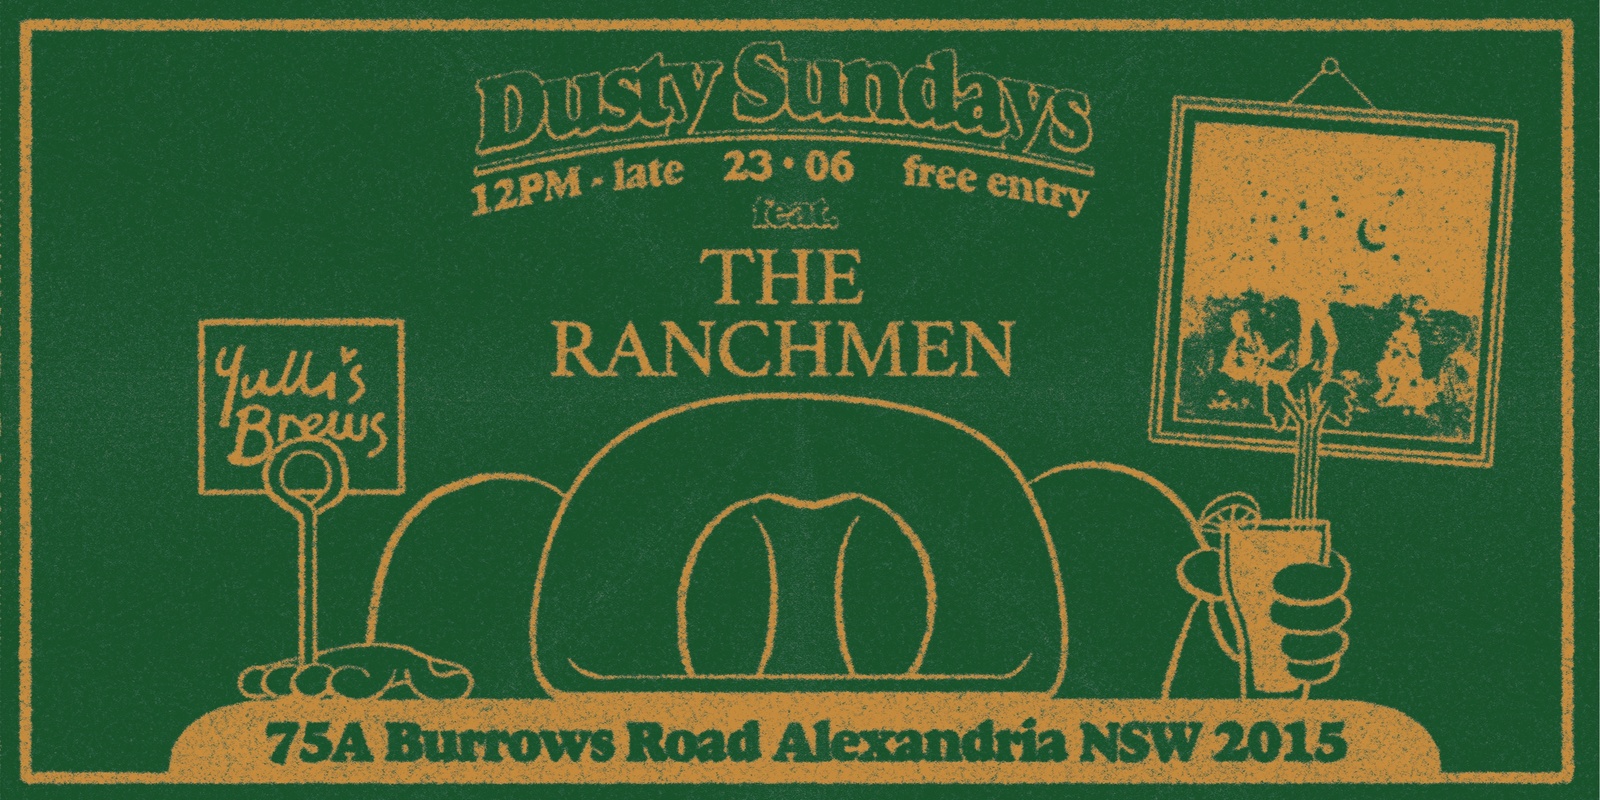 DUSTY SUNDAYS - THE RANCHMEN 